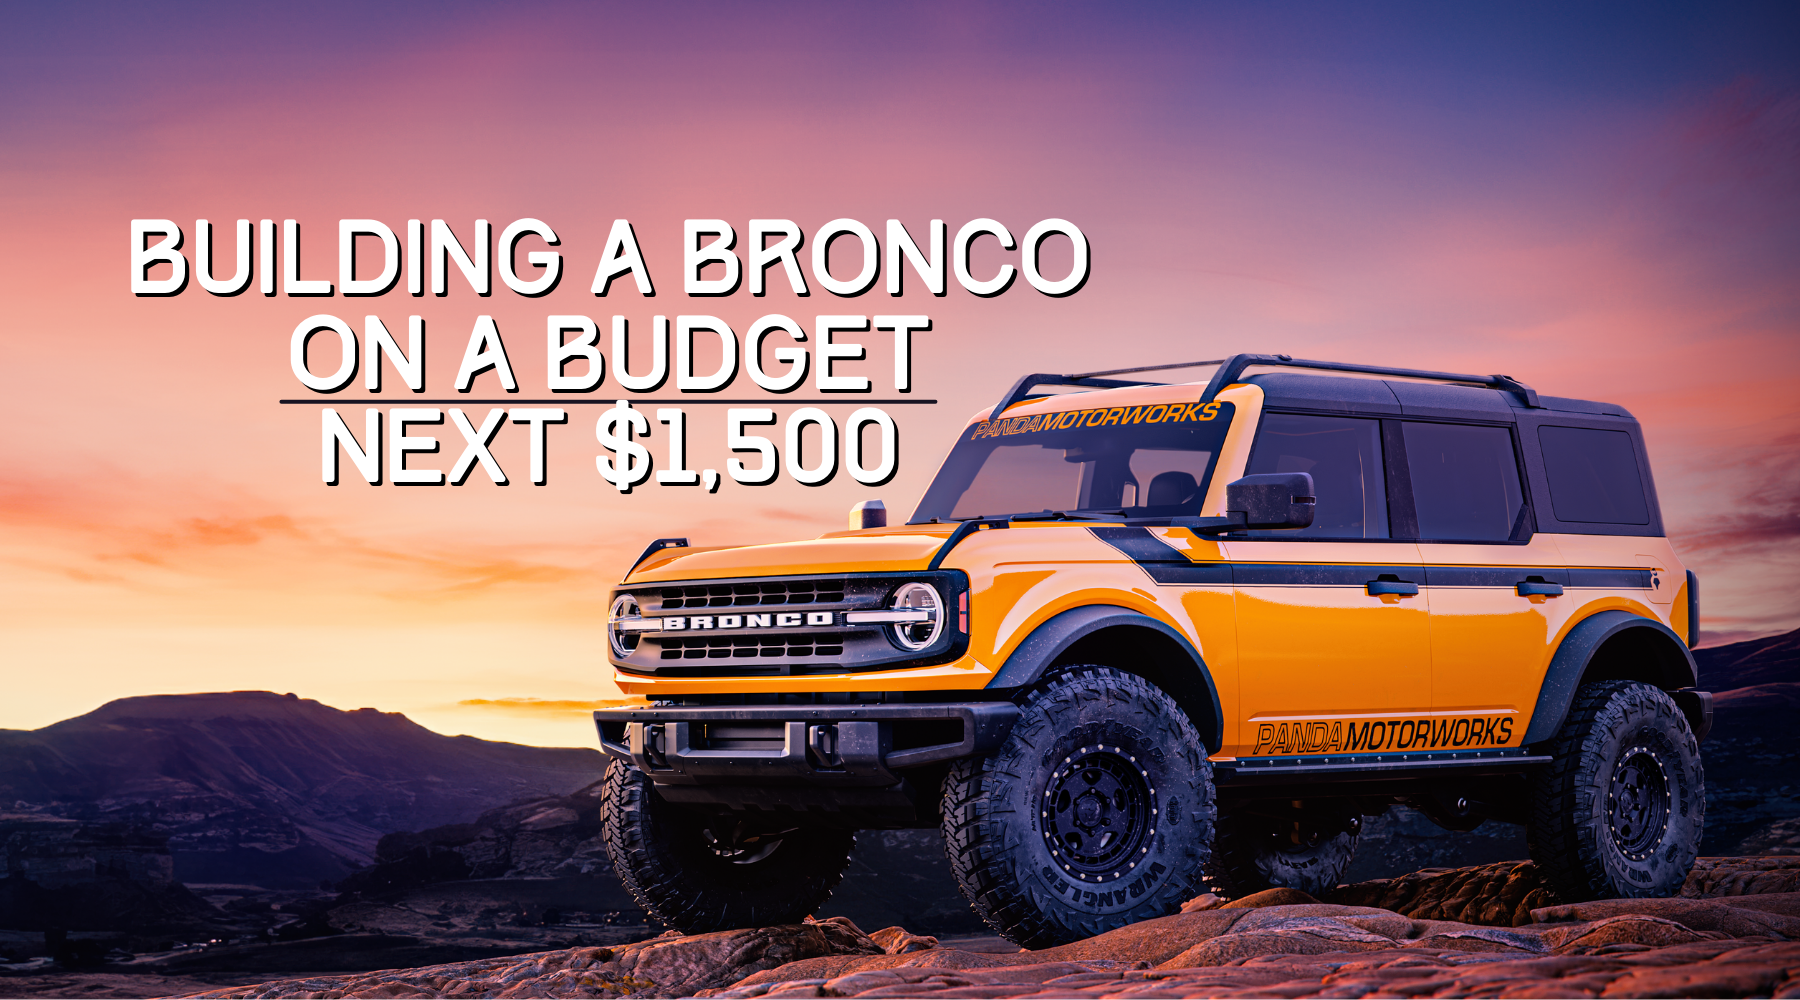 Modding your Bronco for $1,500